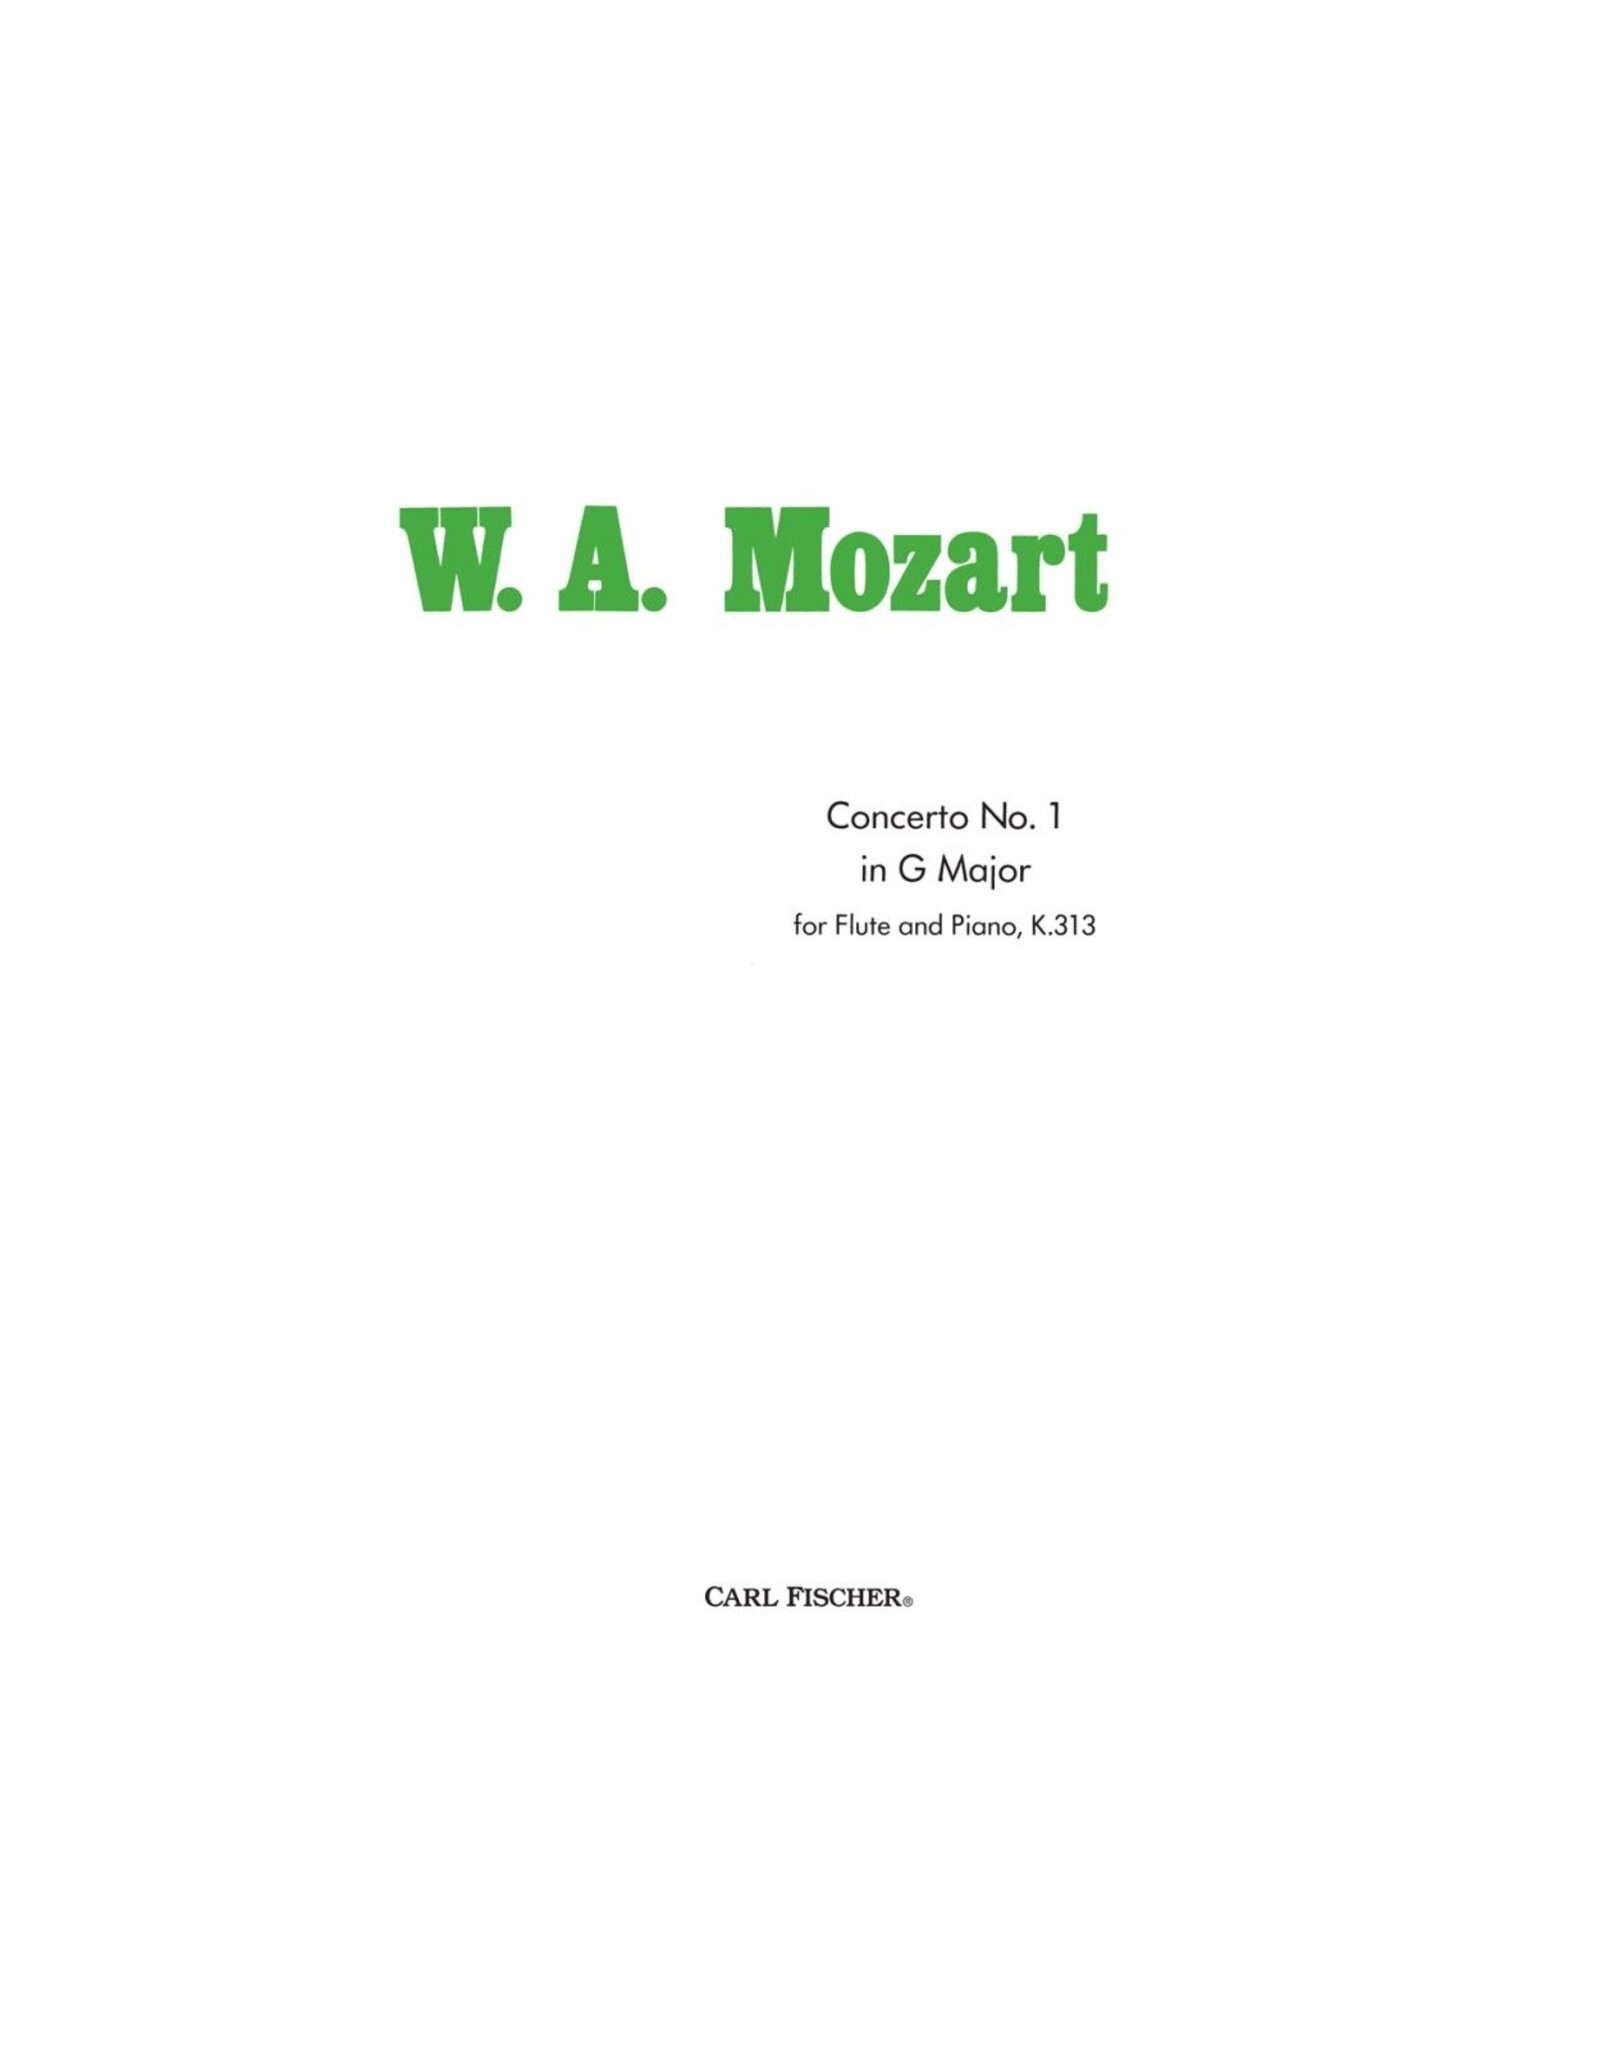 Carl Fischer LLC Concerto No.1 In G Major Flute, Piano G MAJOR - Wolfgang Amadeus Mozart